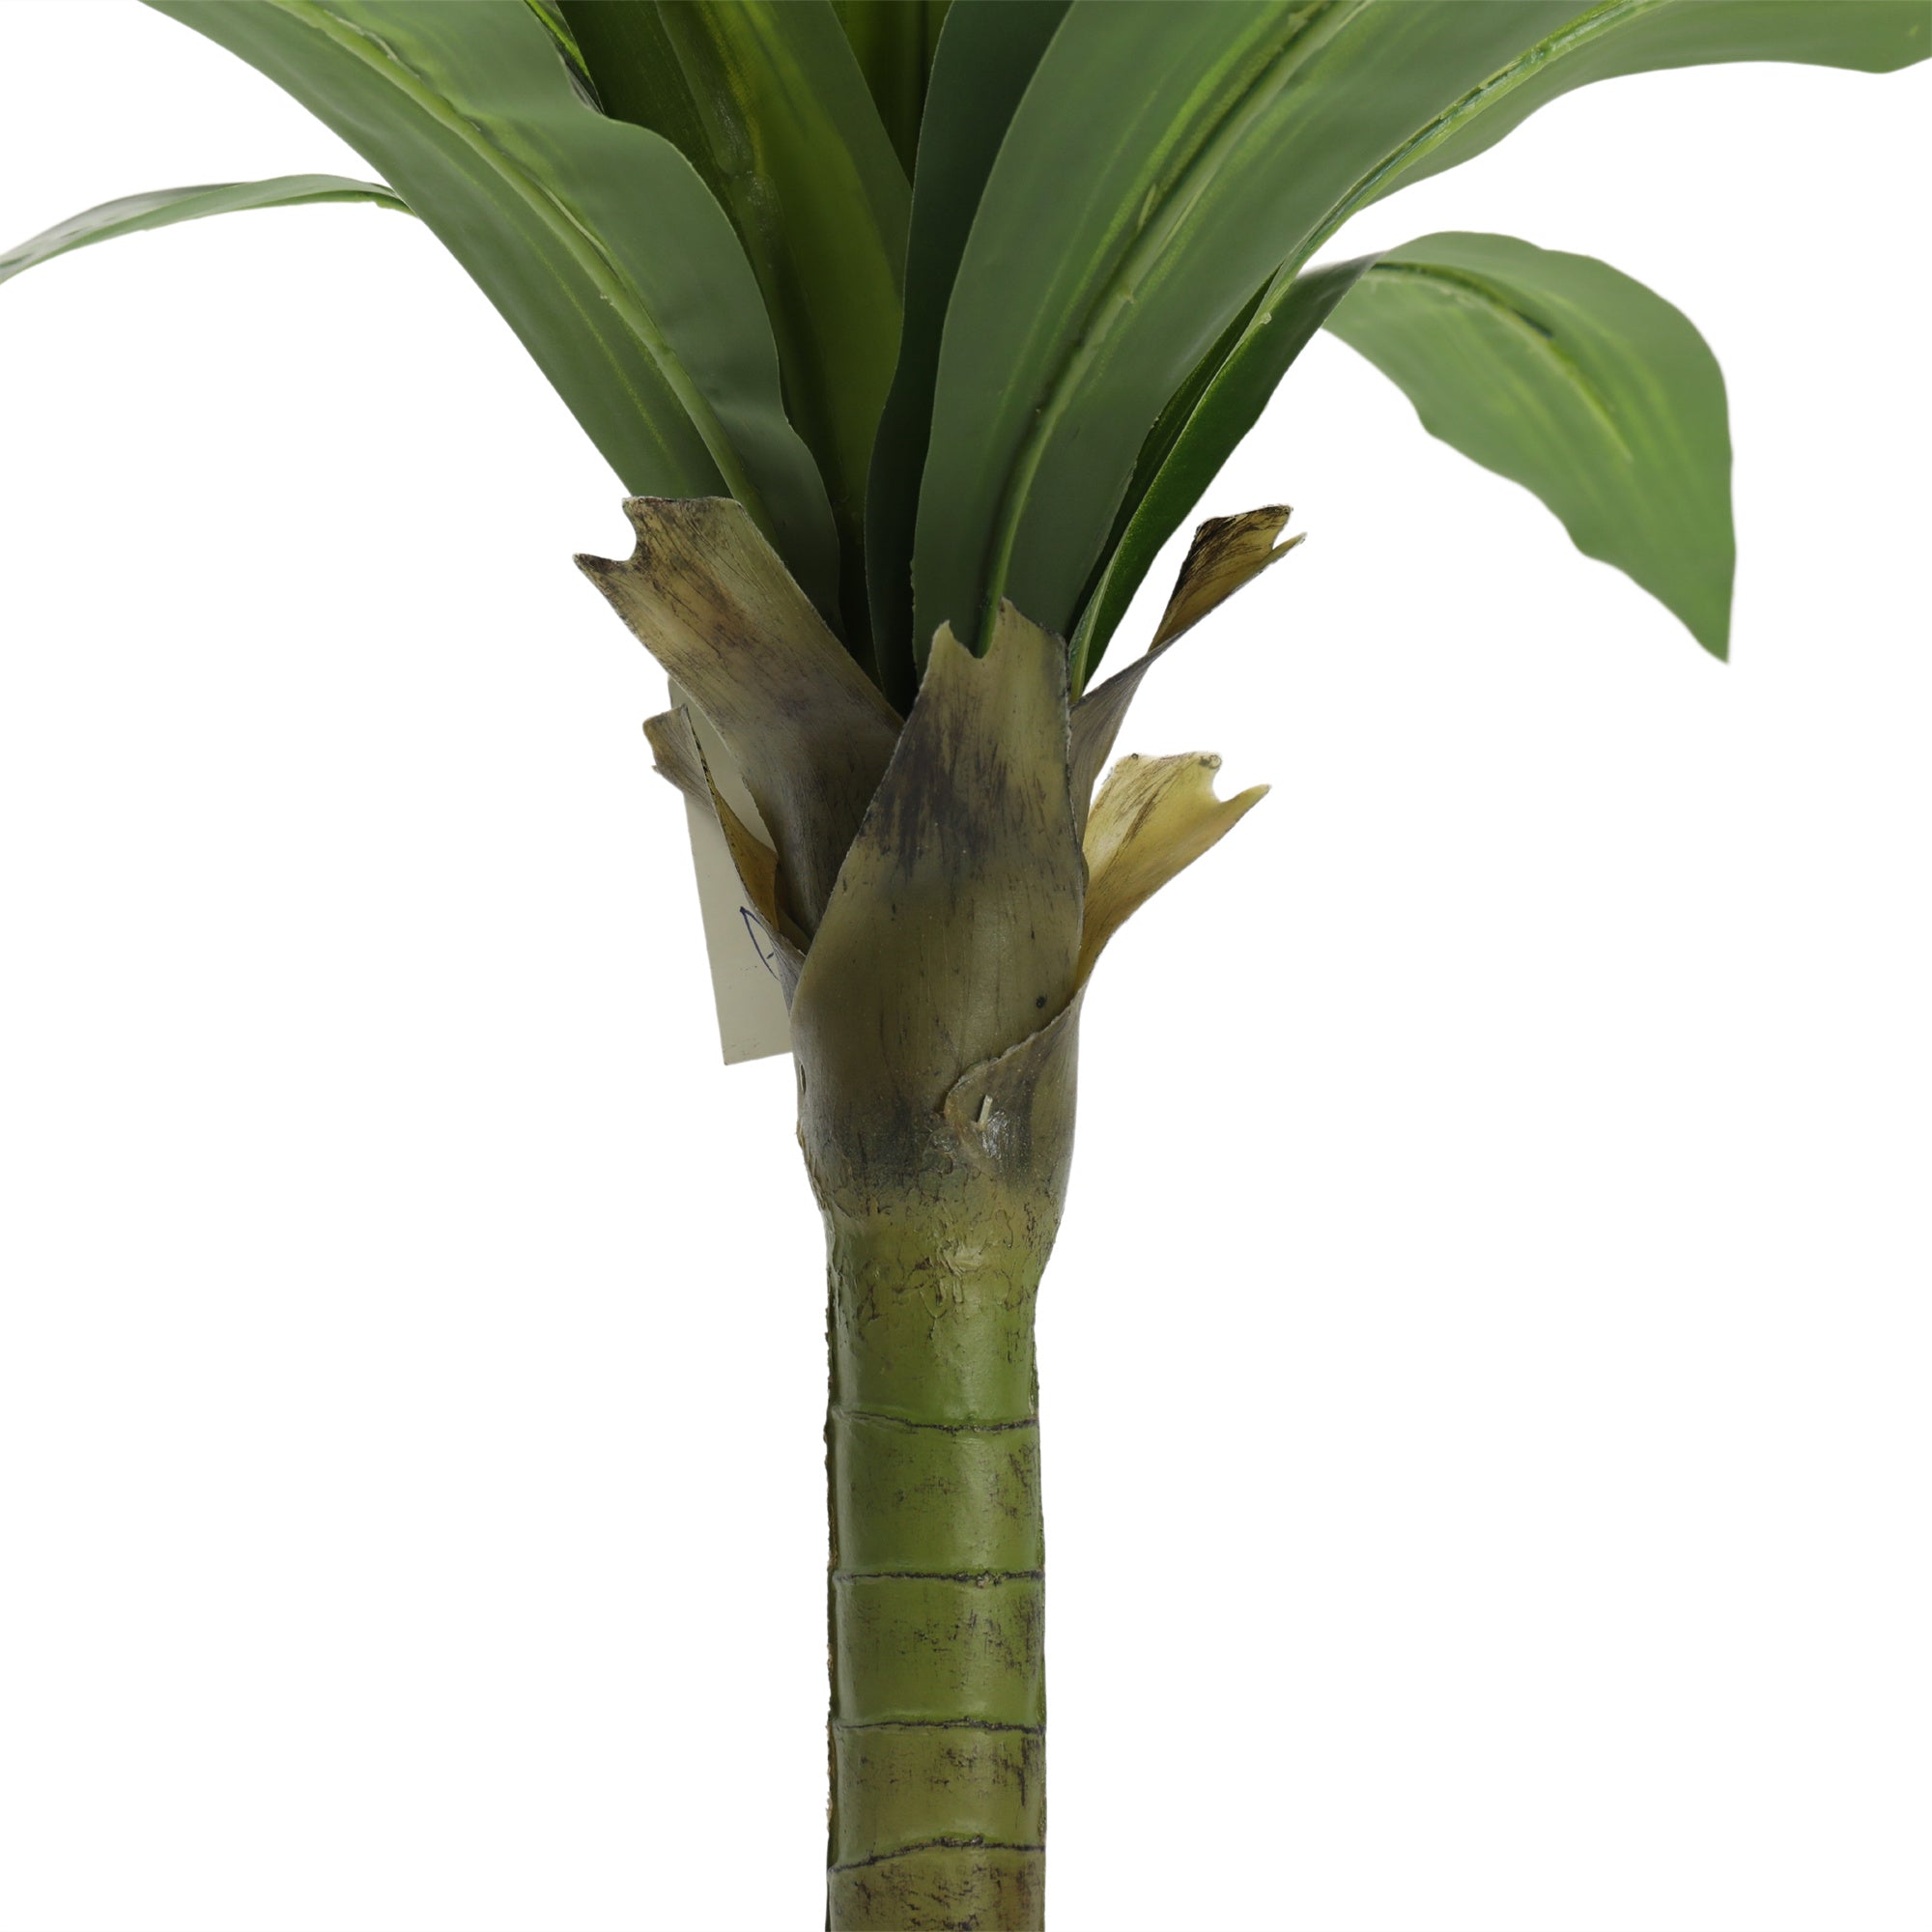 Dracaena palm